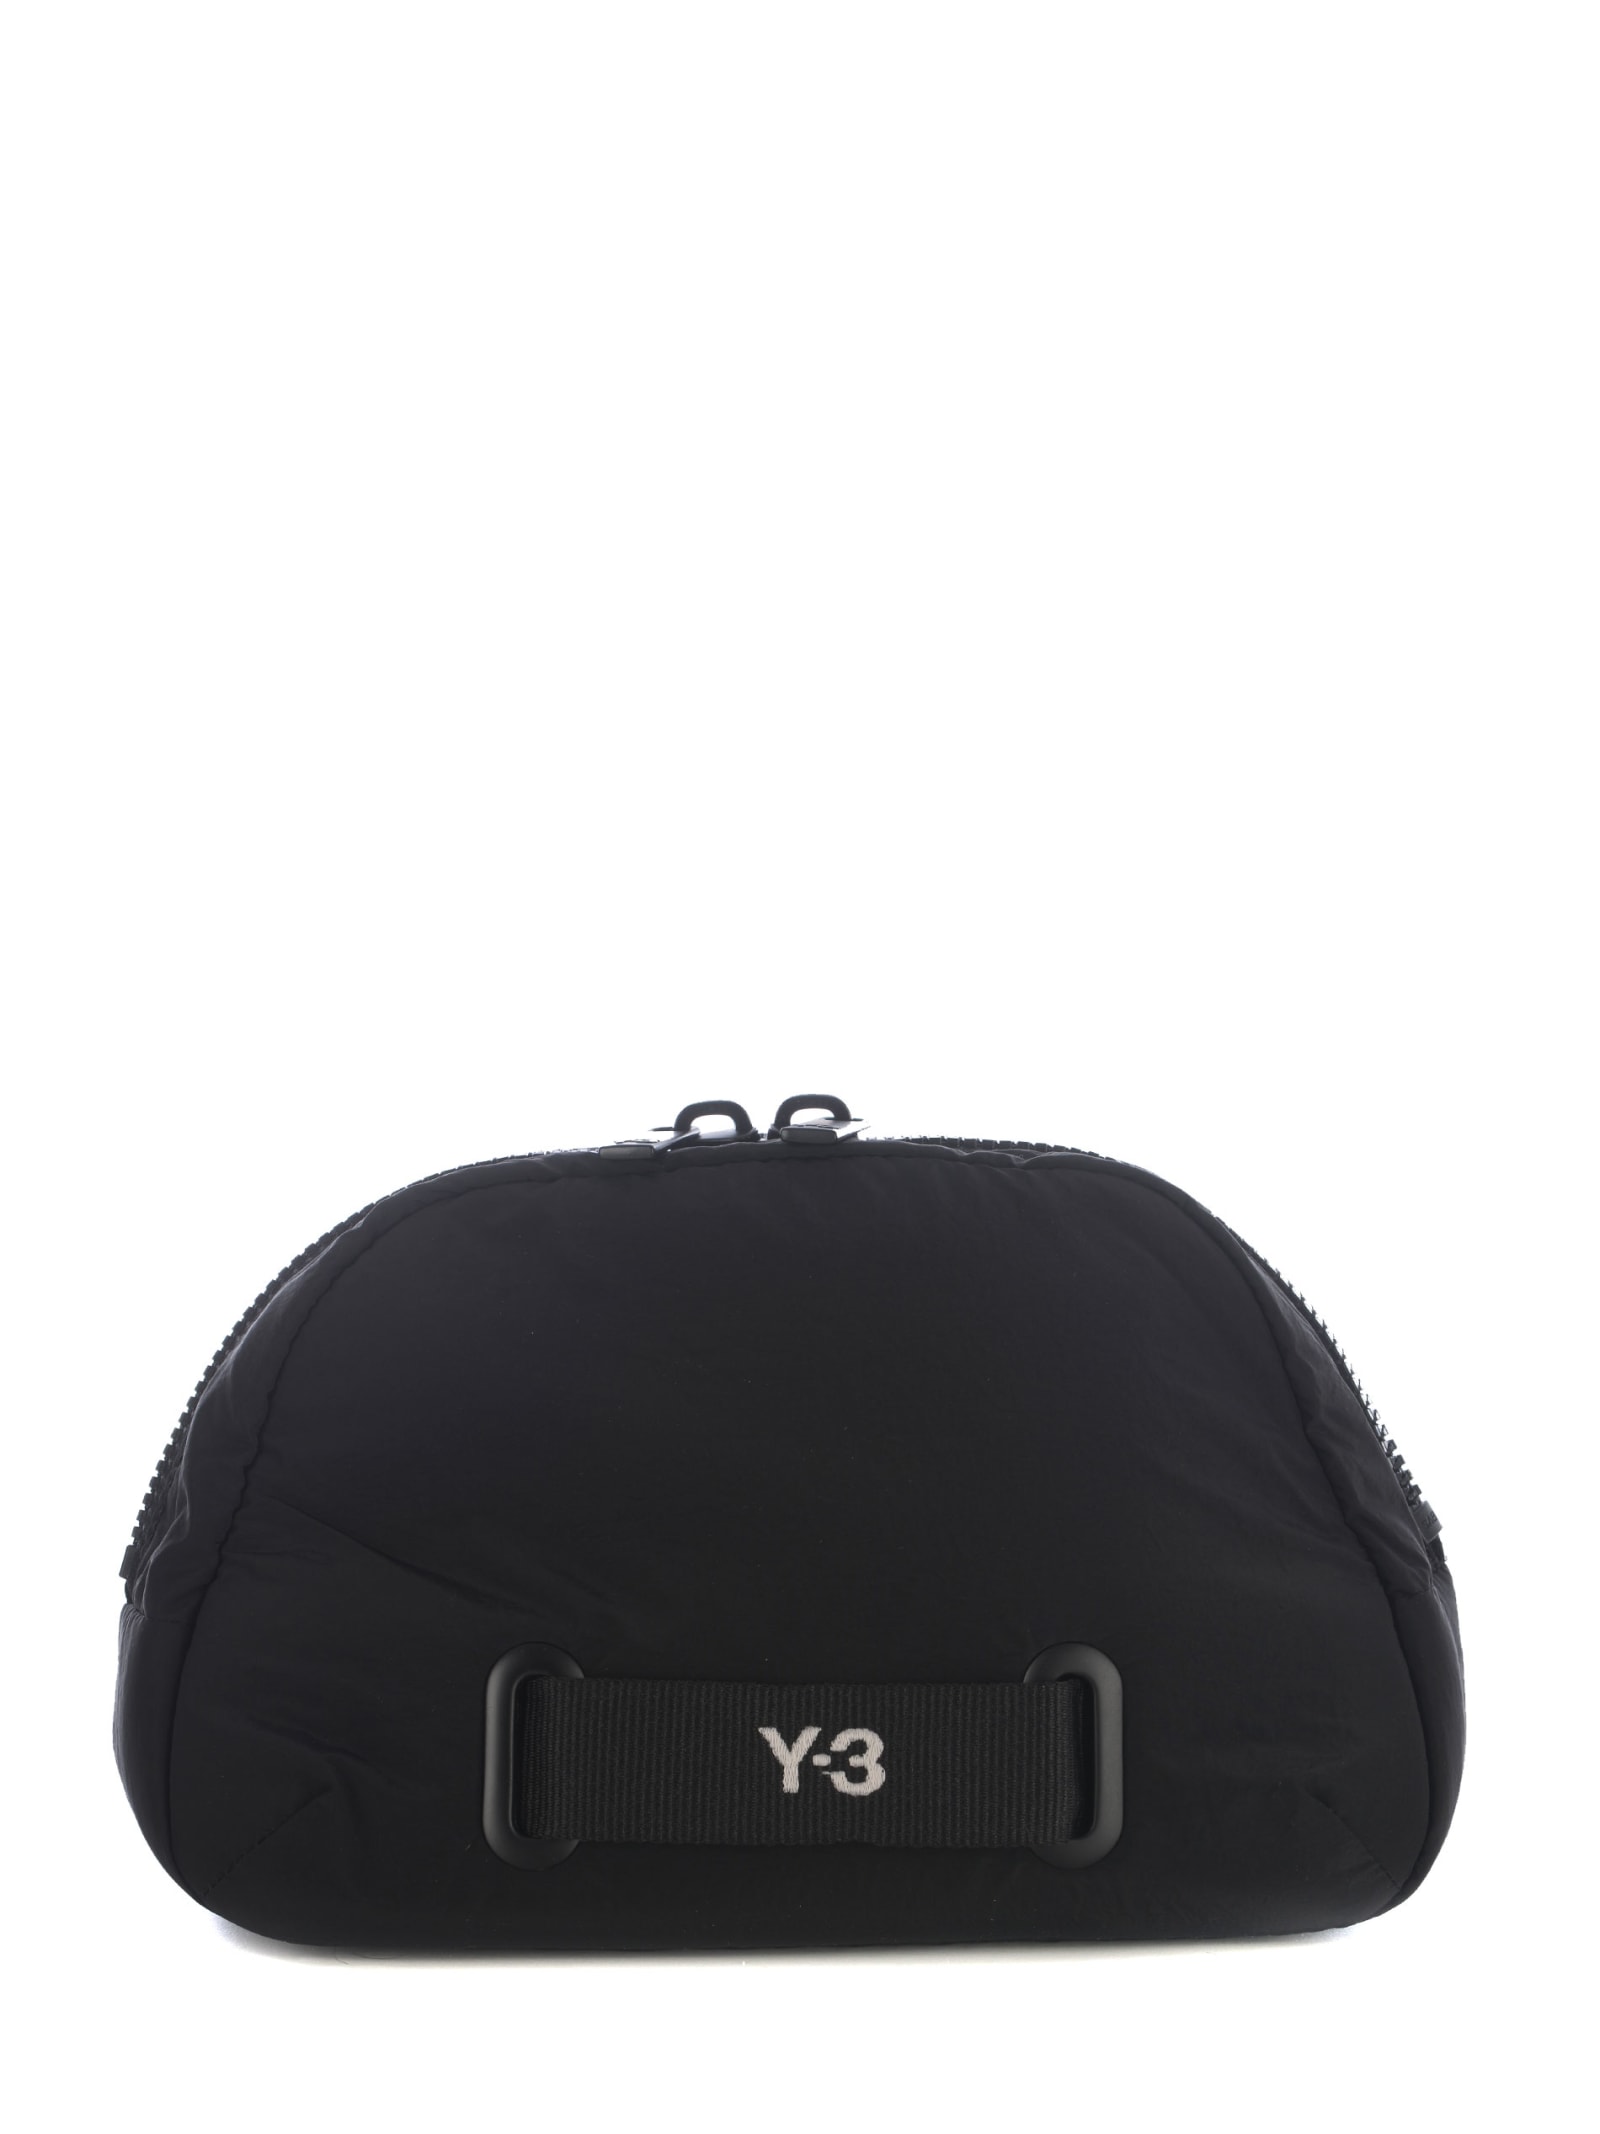 Y-3 Bag Pouchy-3 x Body In Nylon